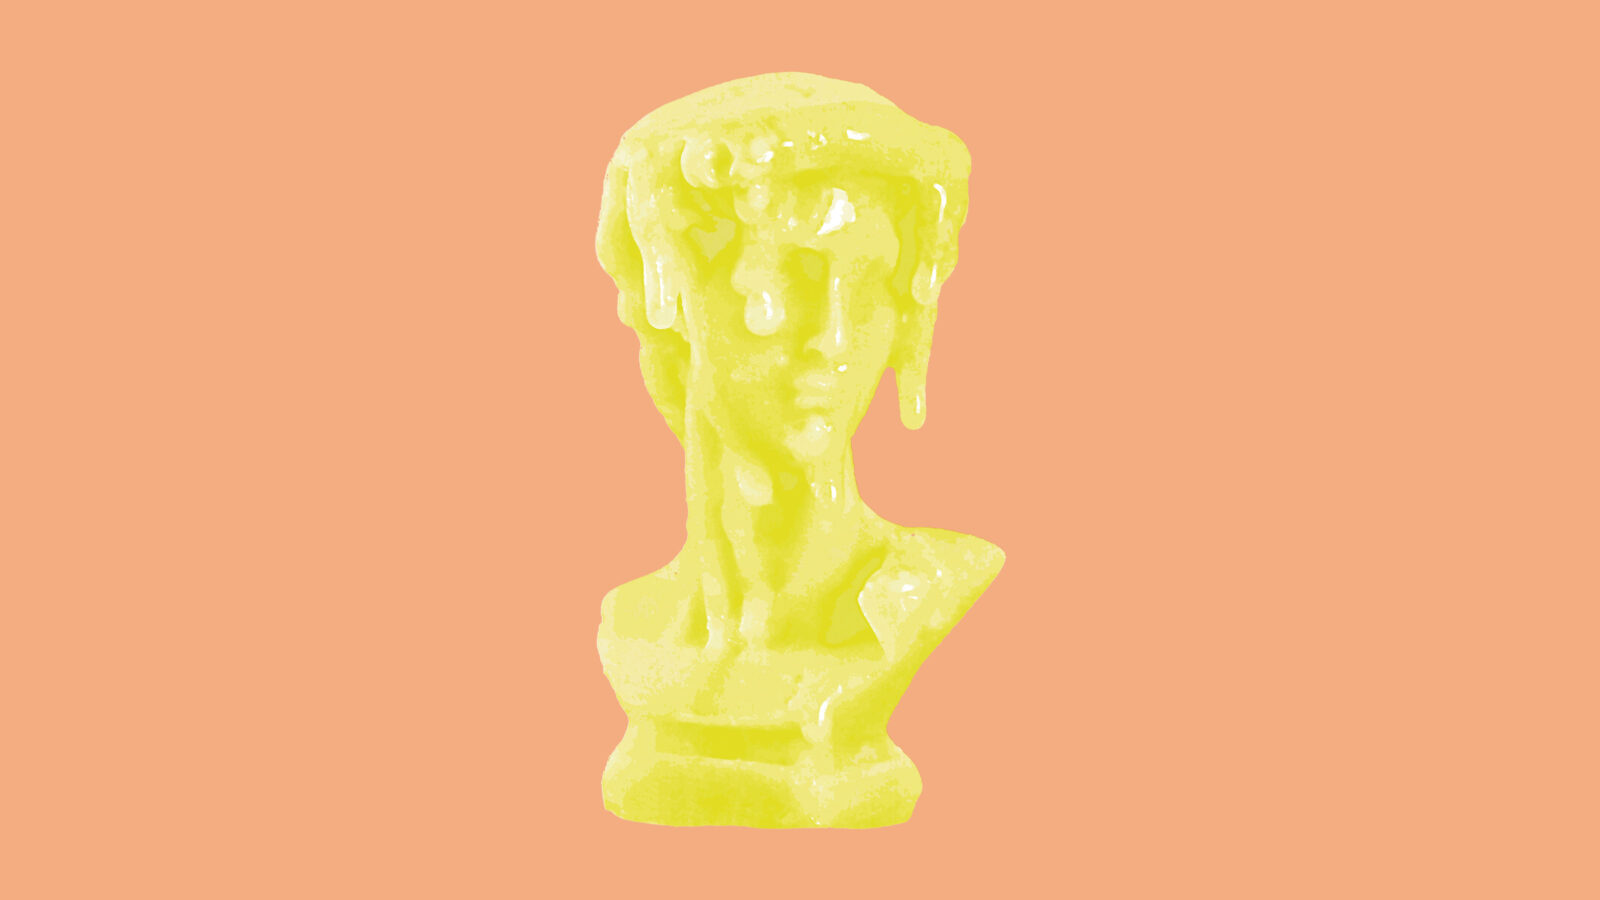 Melting butter statue of david bust